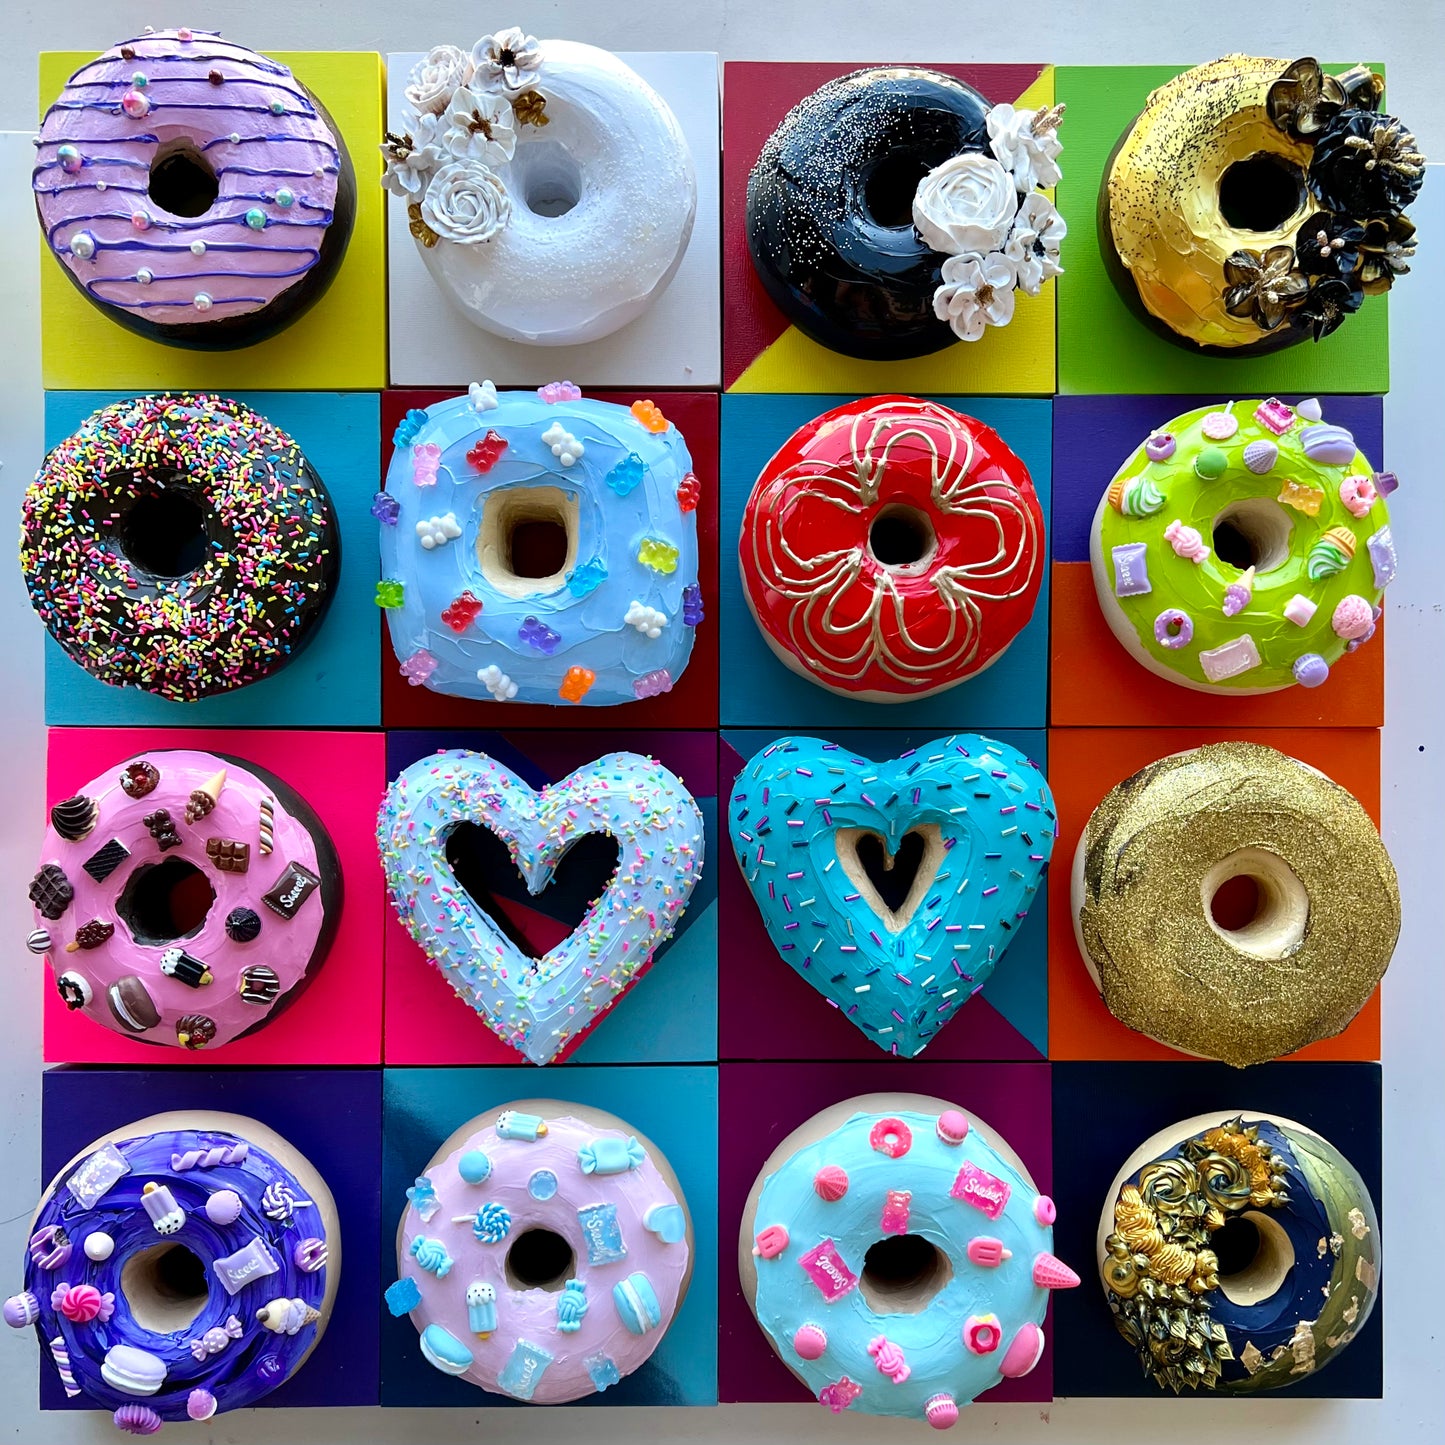 Gray Donuts #17,23,24